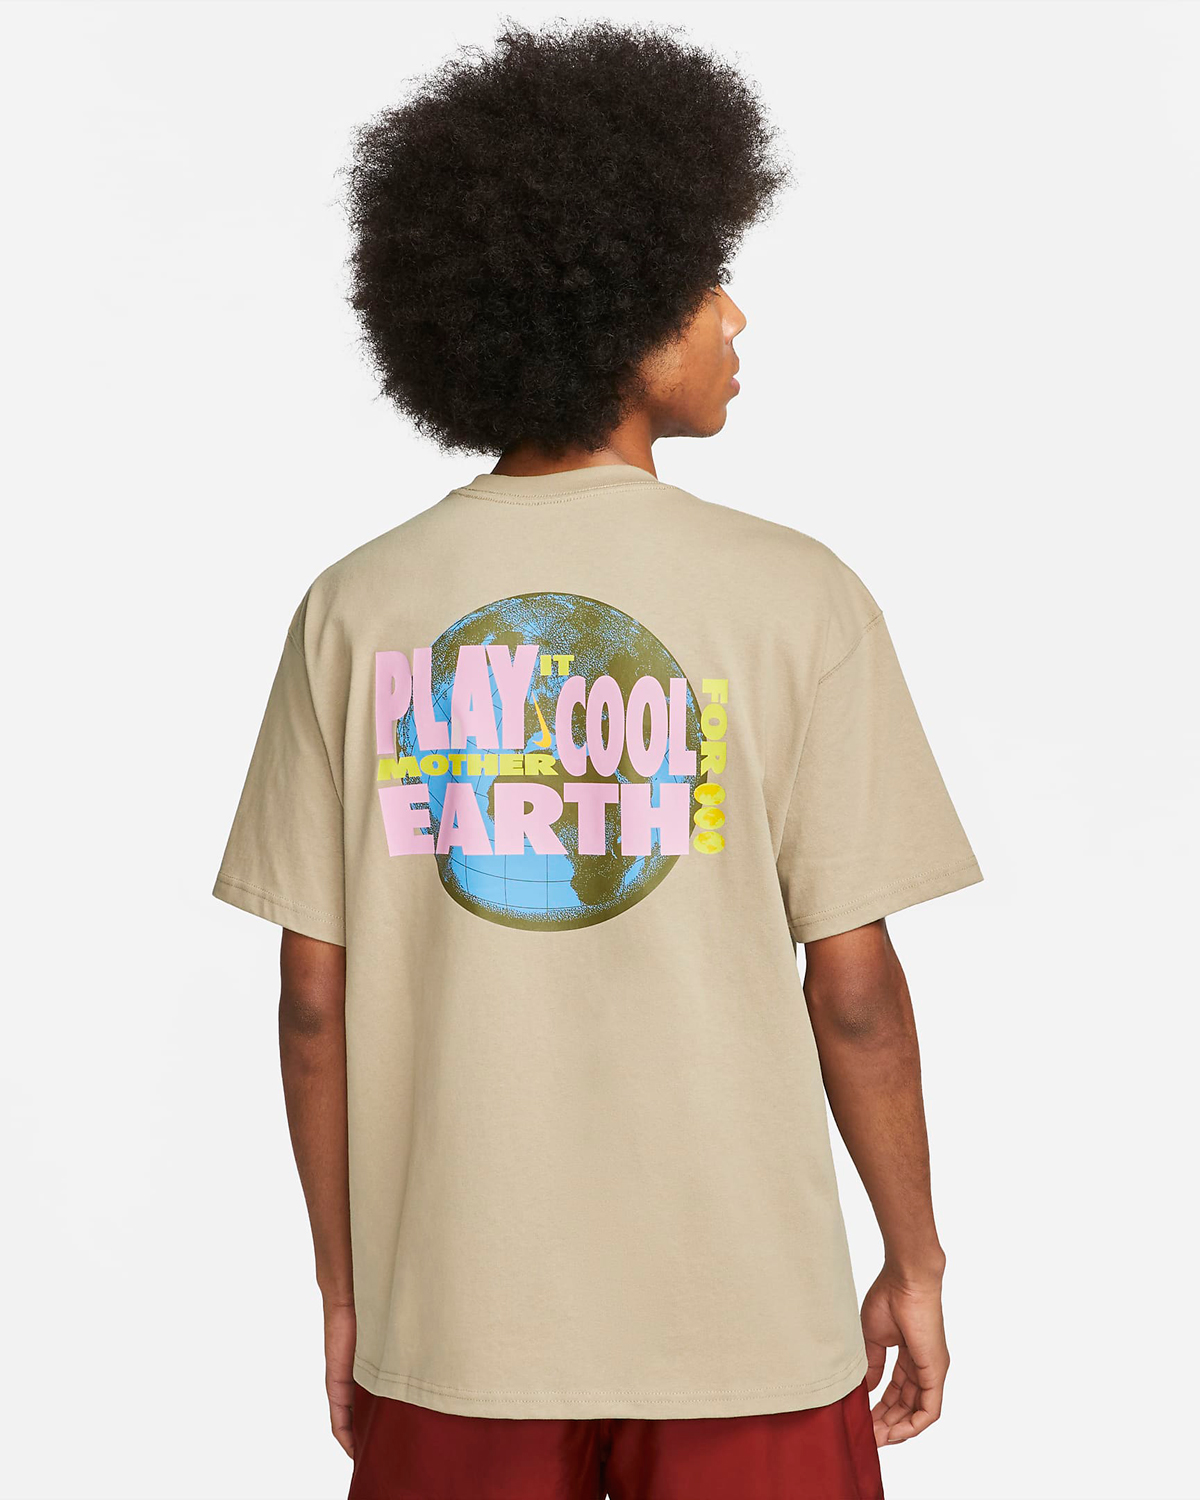 Nike-Sportswear-Play-It-Cool-for-Mother-Earth-T-Shirt-Khaki-2